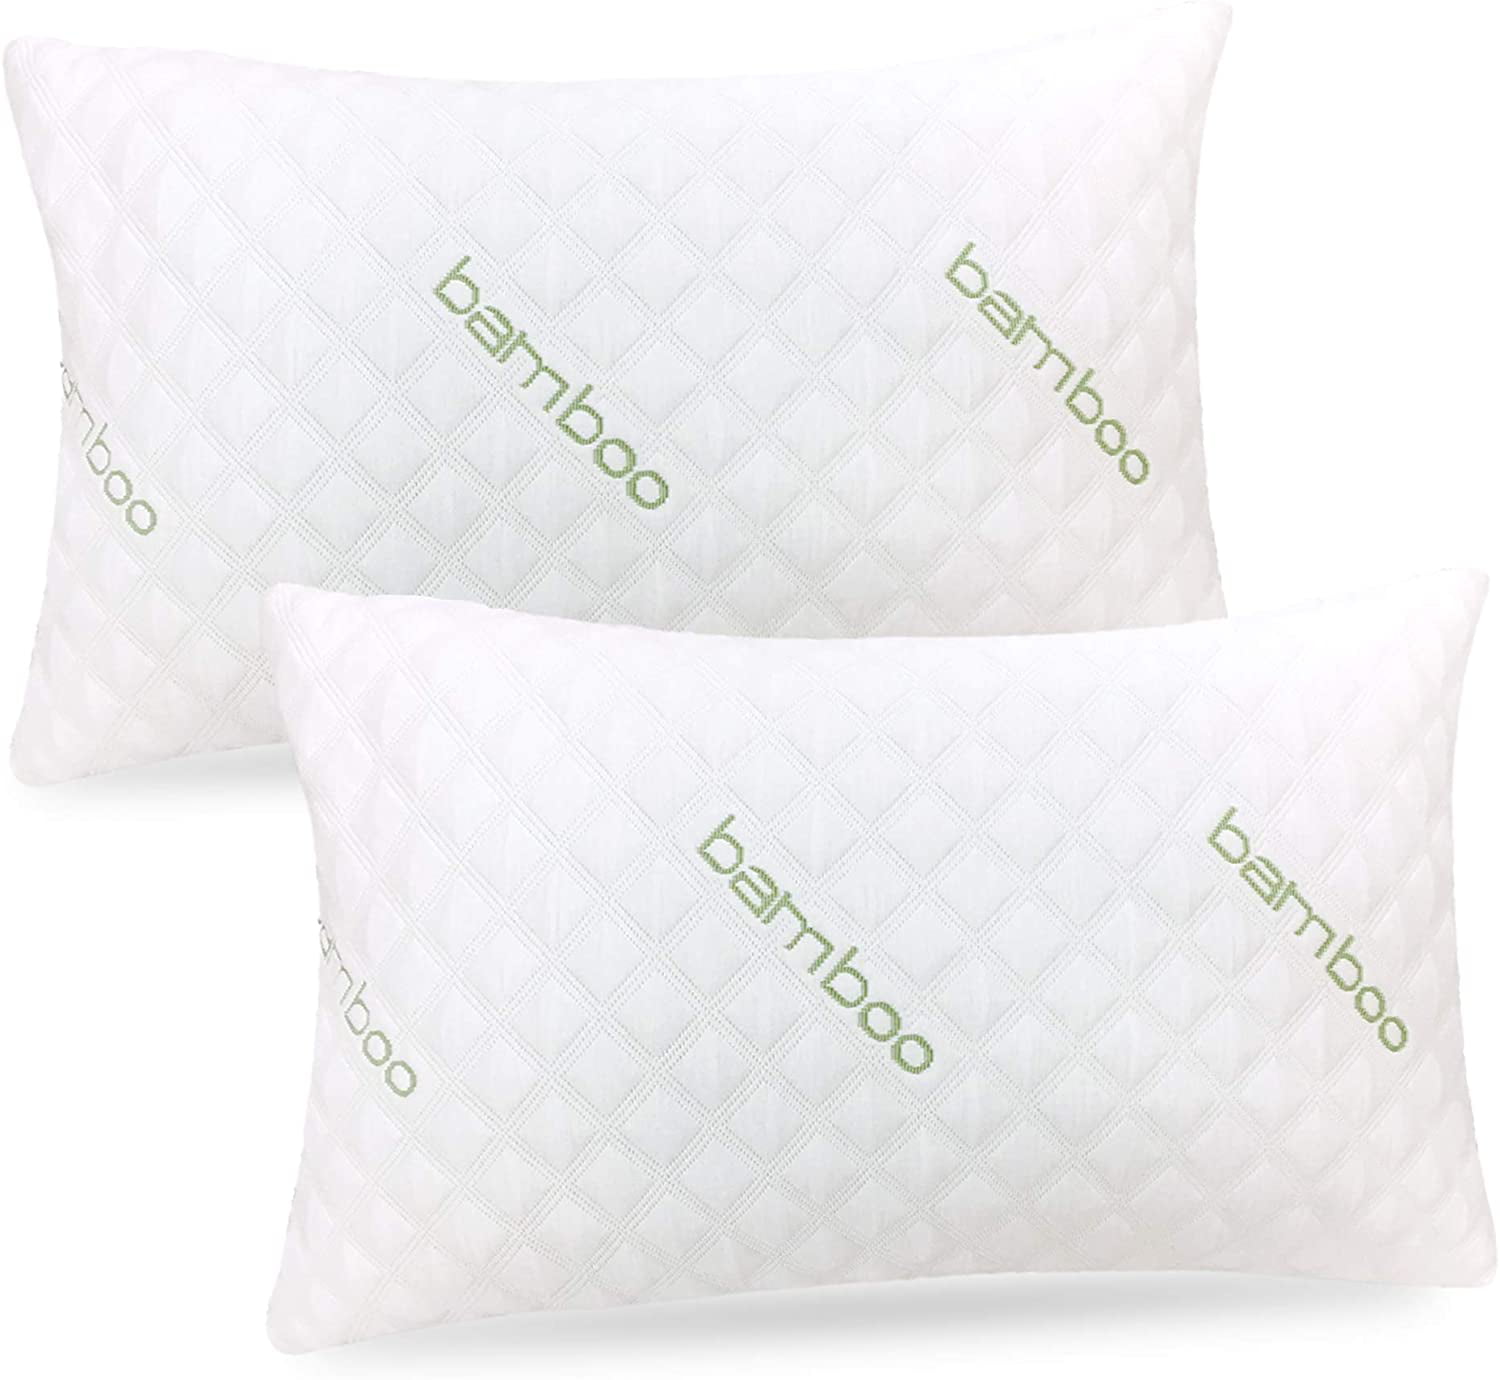 Details about   45D Bamboo Shredded Memory Foam Pillow Queen Fiber Comfort Soft Anti-Bacteria 